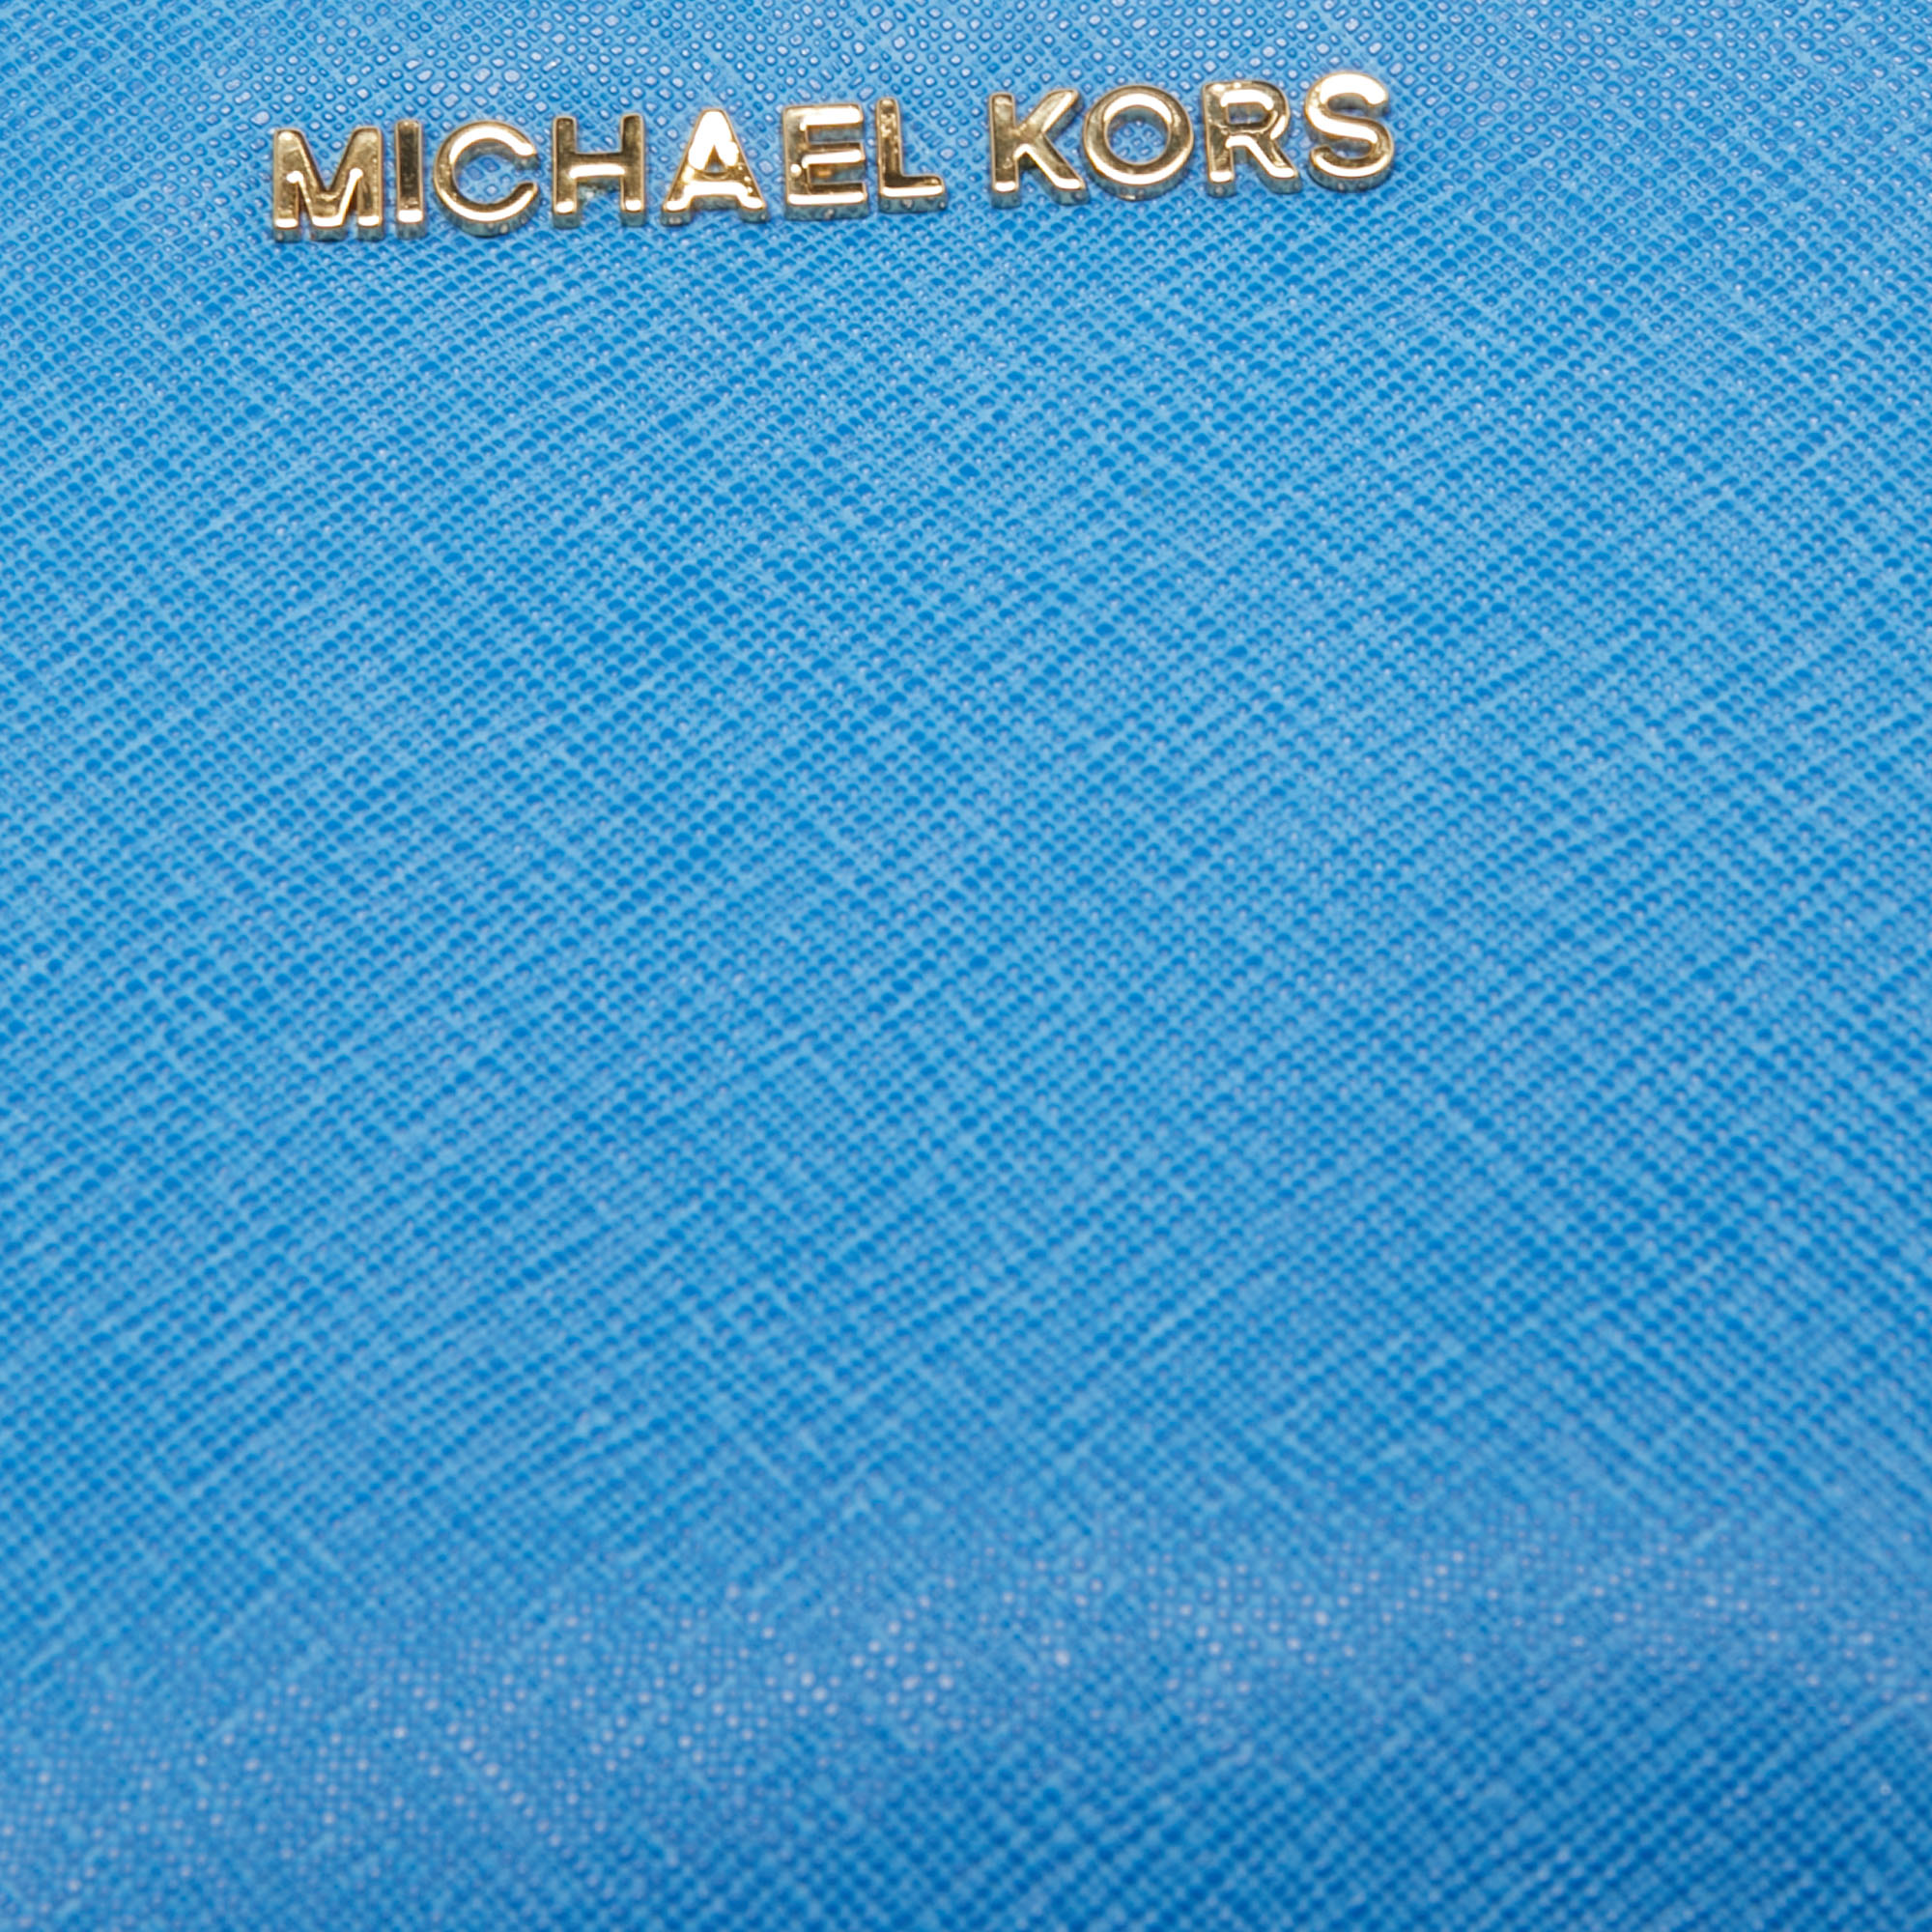 Michael Kors Light Blue Leather Mini Selma Crossbody Bag